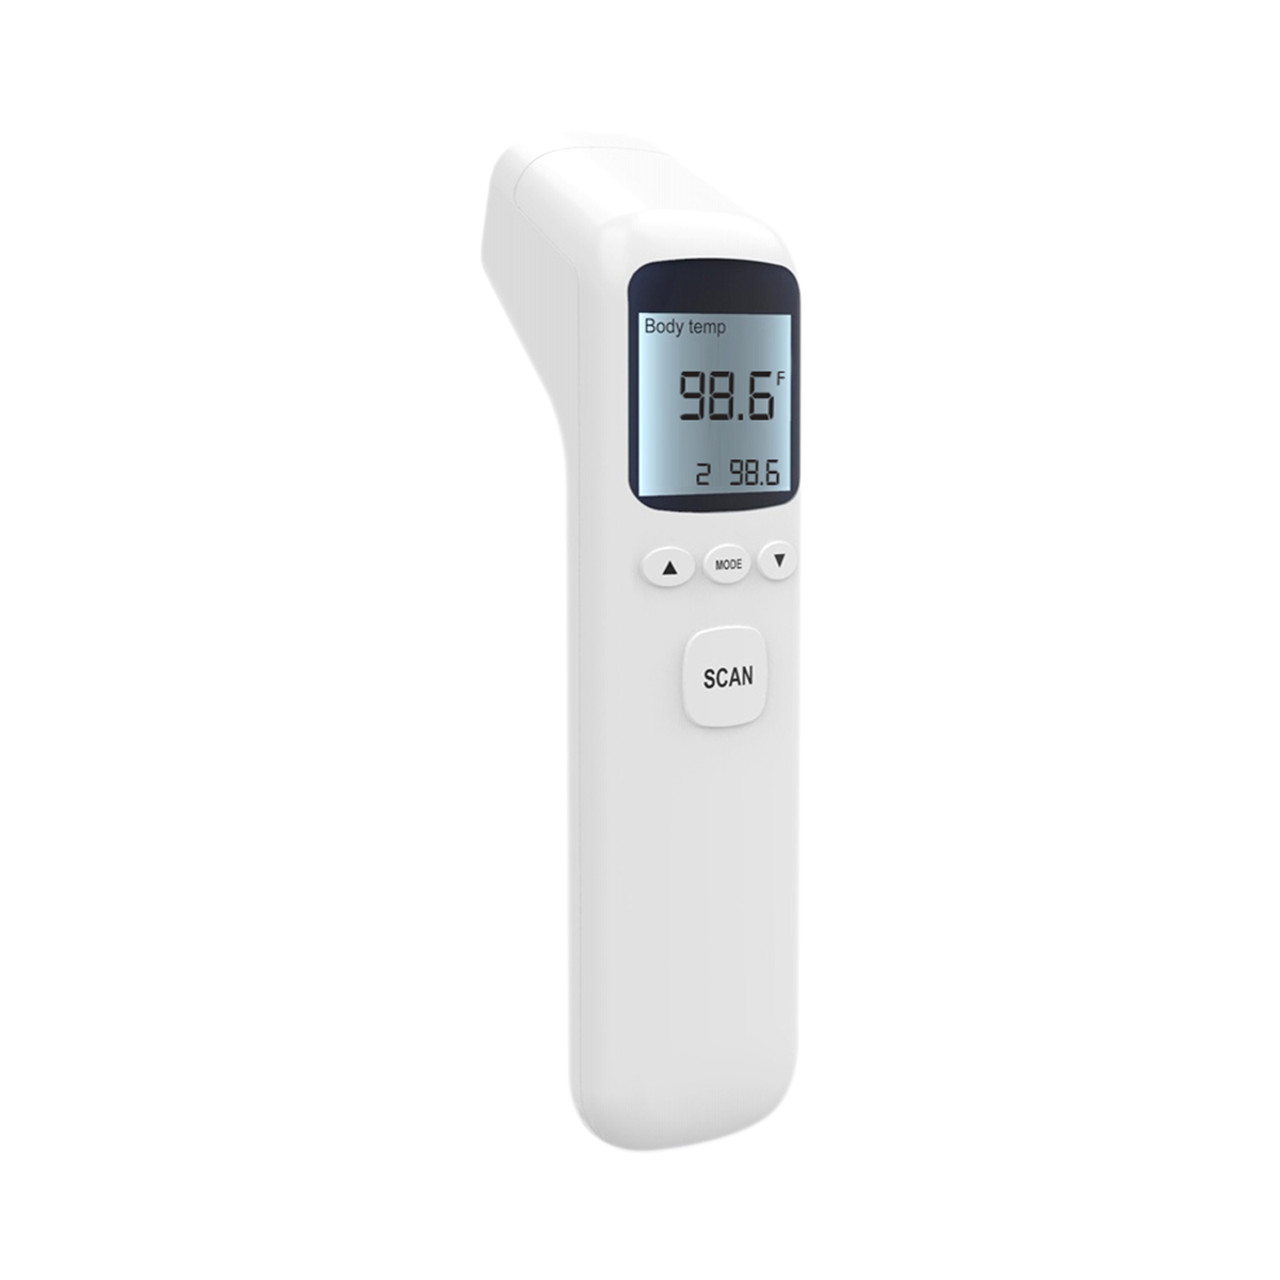 Clenera Digital Thermometer 